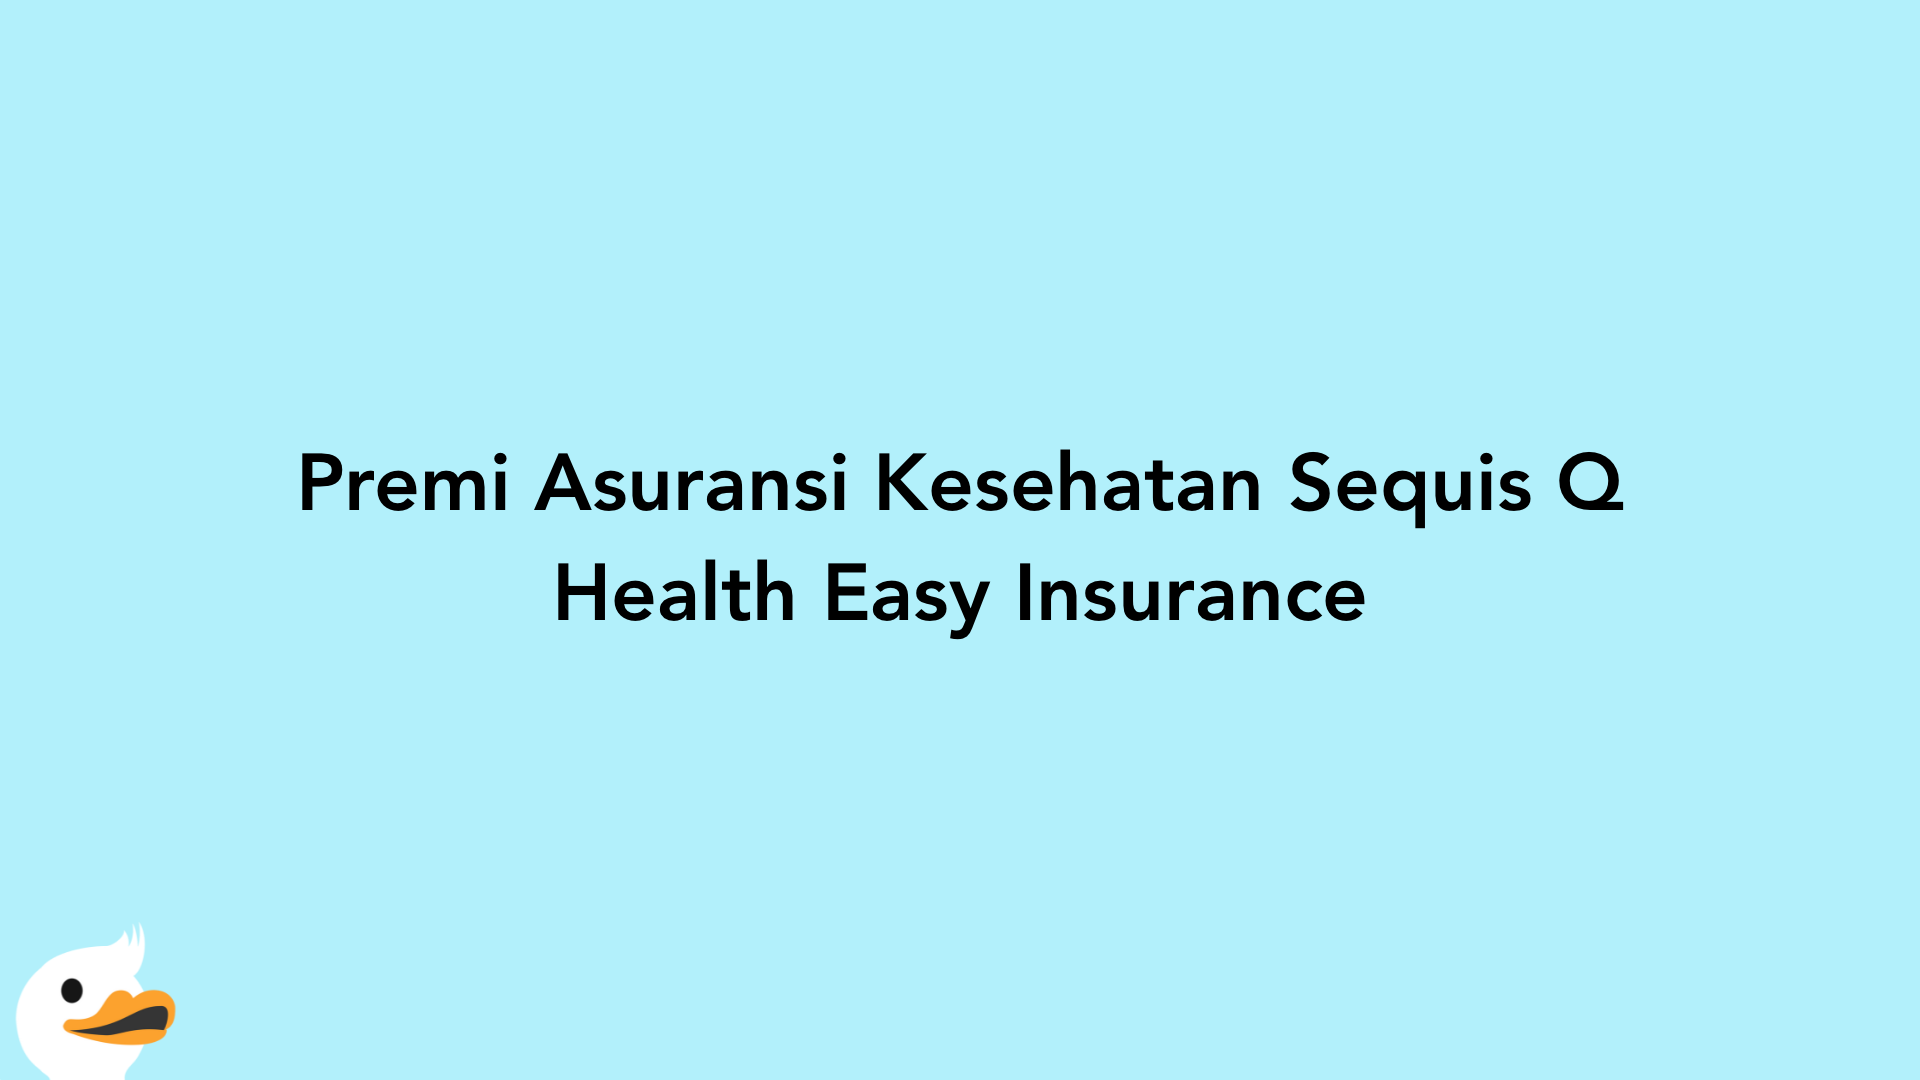 Premi Asuransi Kesehatan Sequis Q Health Easy Insurance